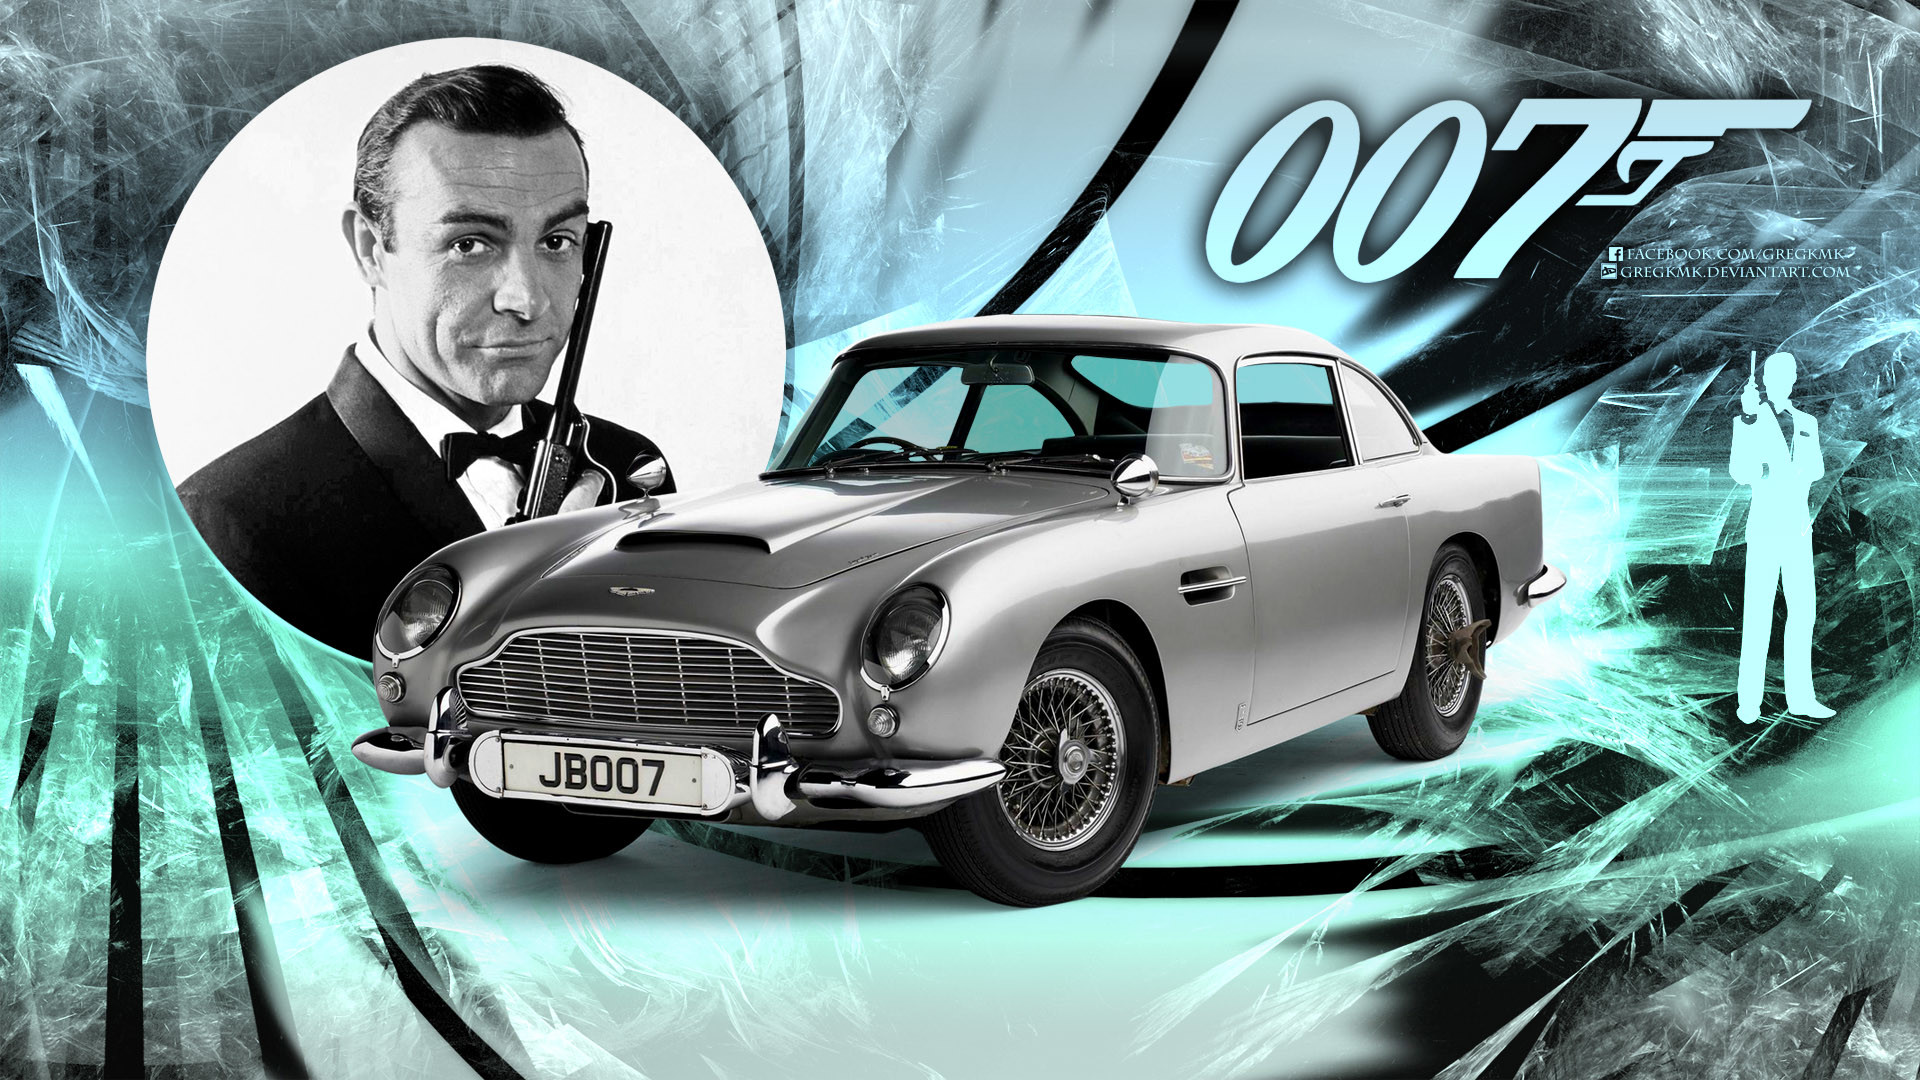 1920x1080 ... James Bond 007 Wallpaper by GregKmk